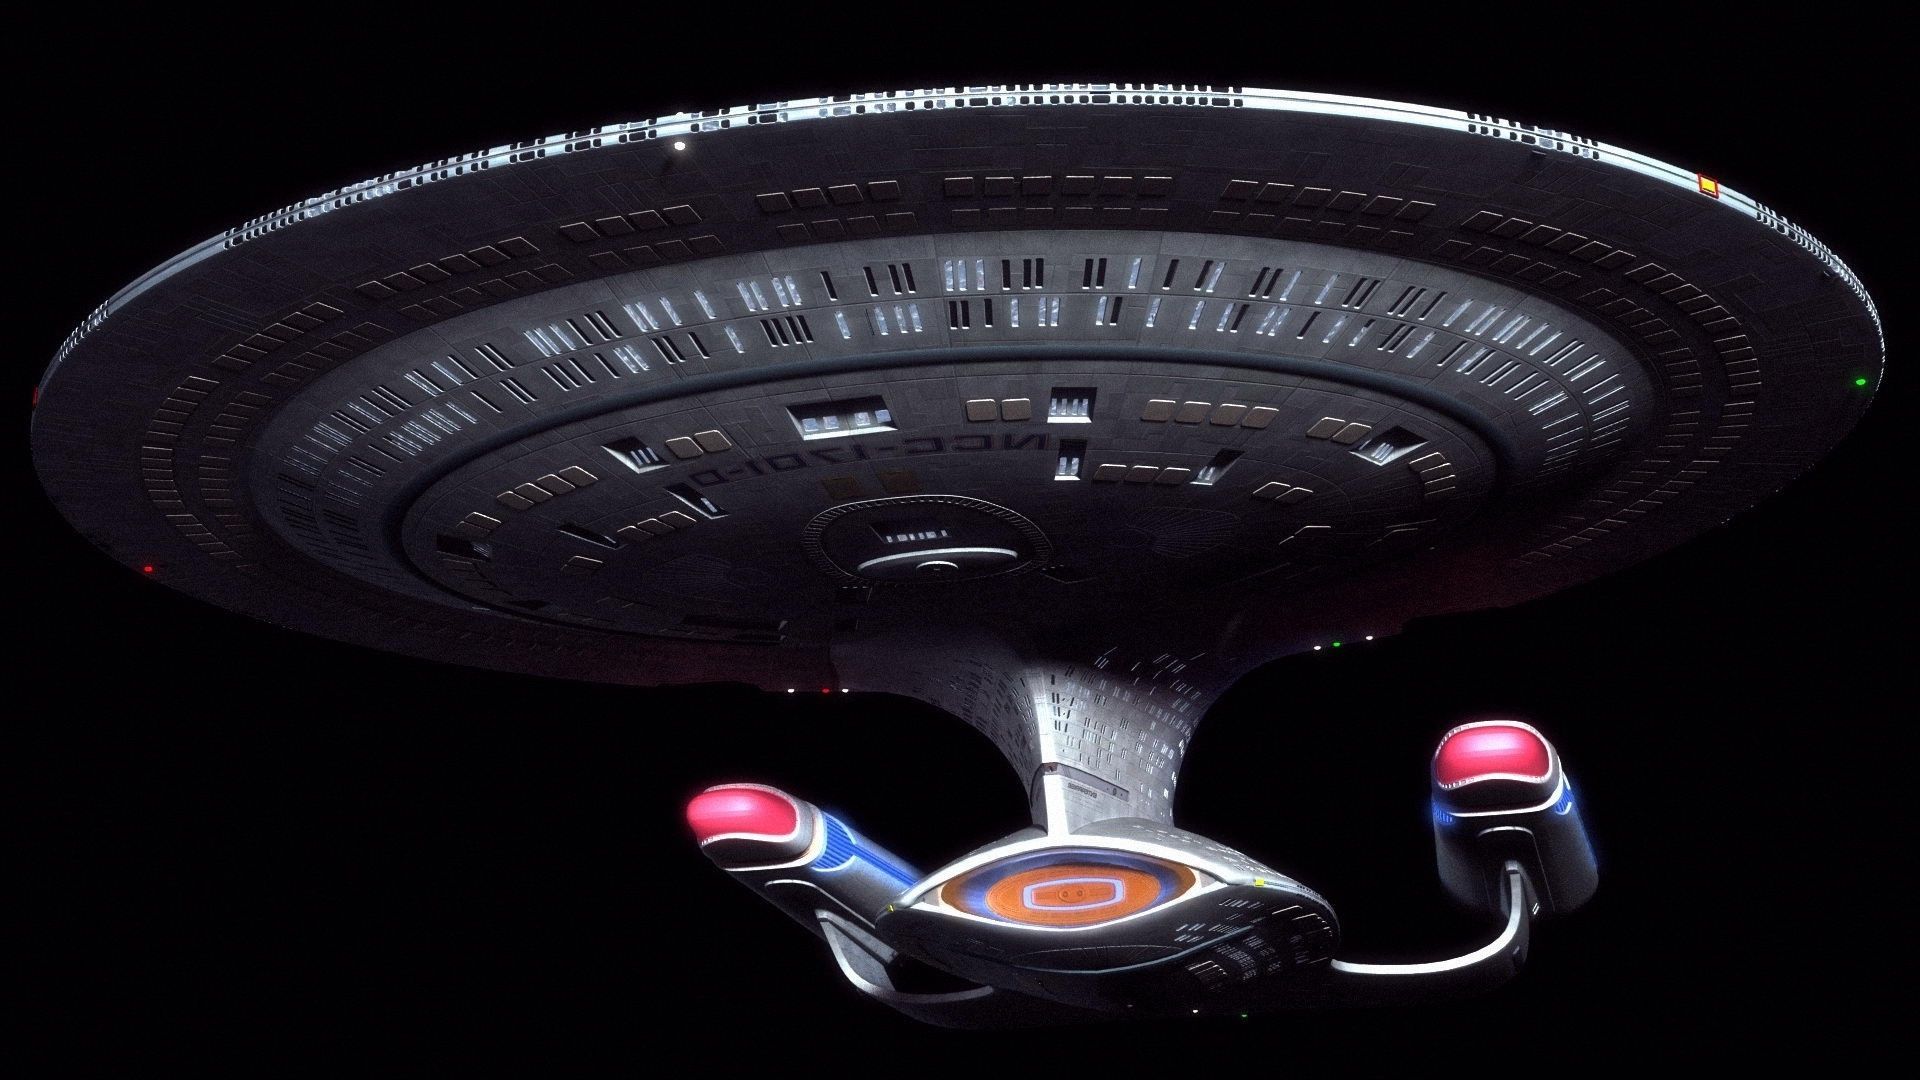 Enterprise - Star Trek Next Generation wallpaper - Free Wide HD